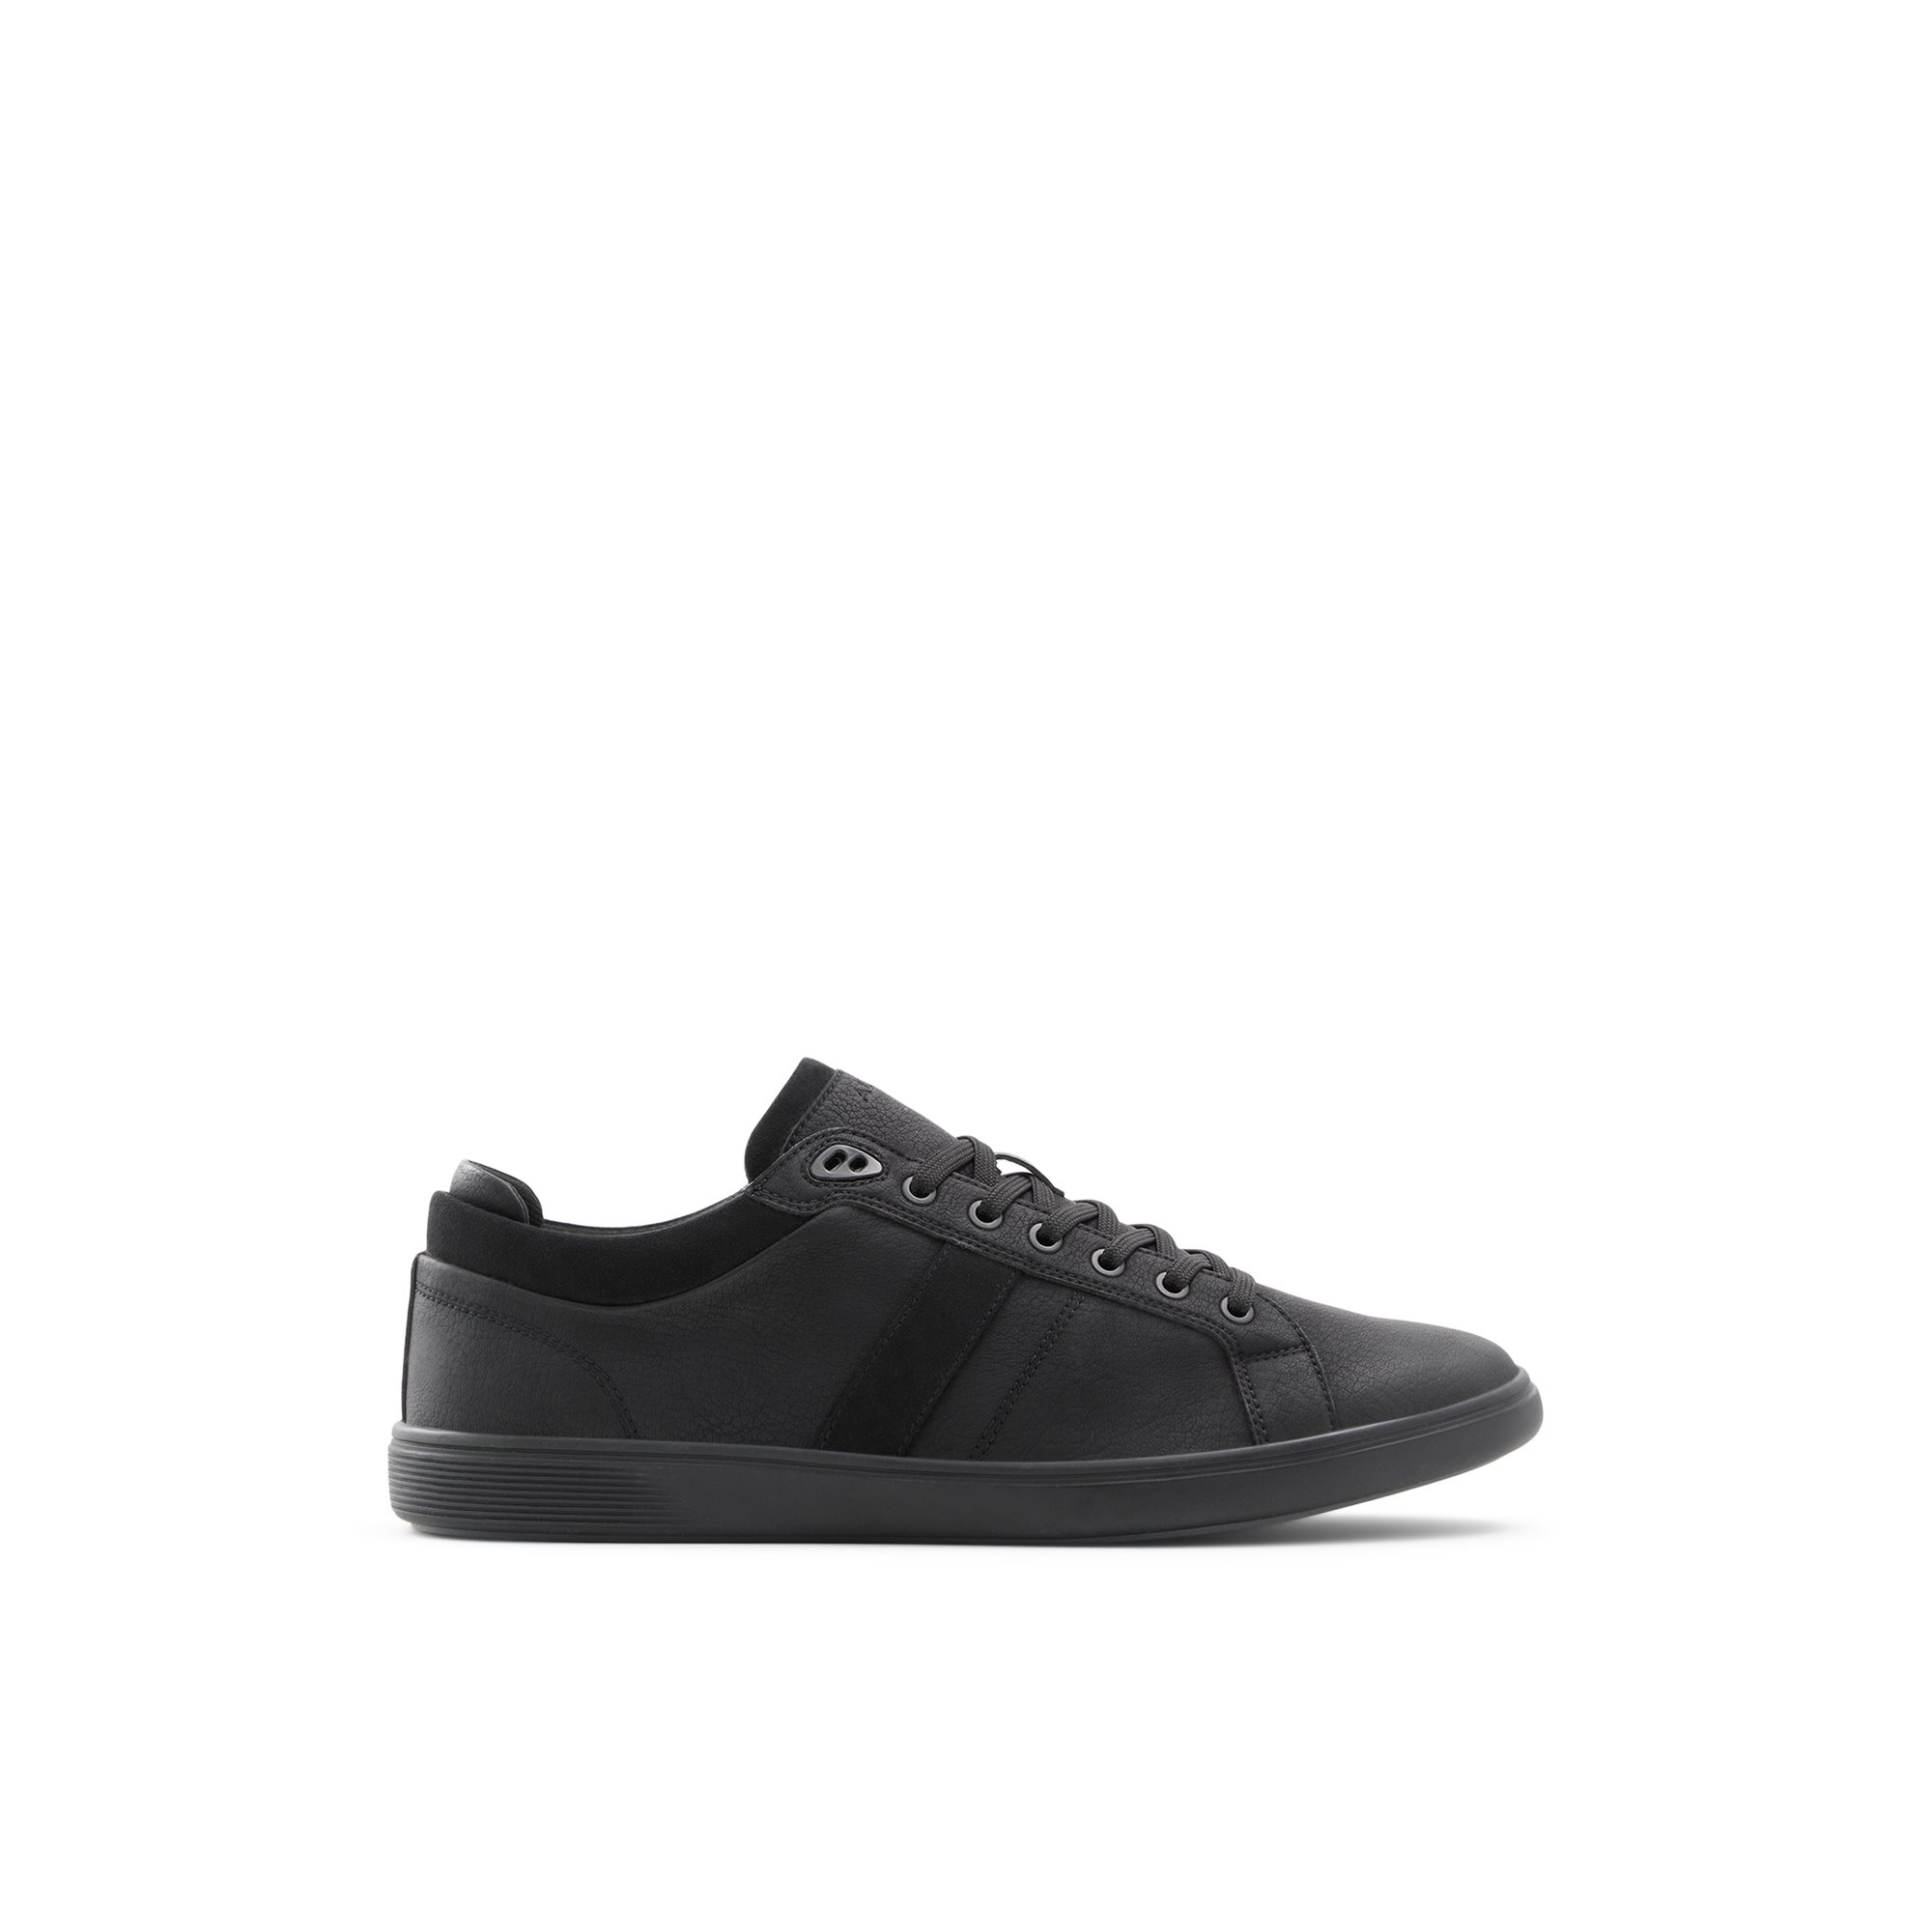 Image of ALDO Koisen - Men's Low Top Sneakers - Black, Size 13